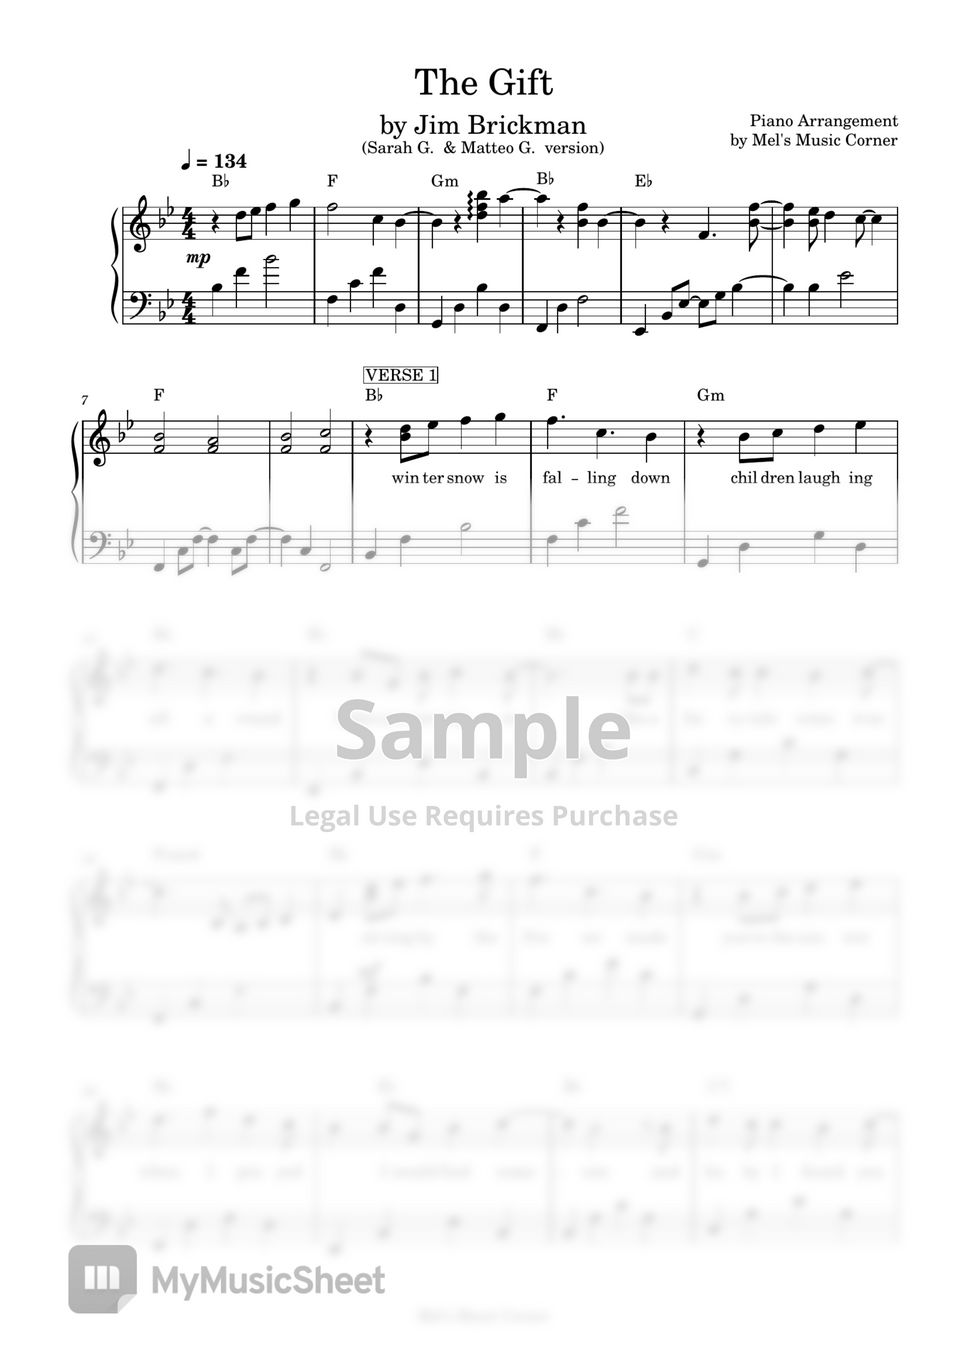 Jim Brickman - The Gift (piano sheet music) by Mel's Music Corner